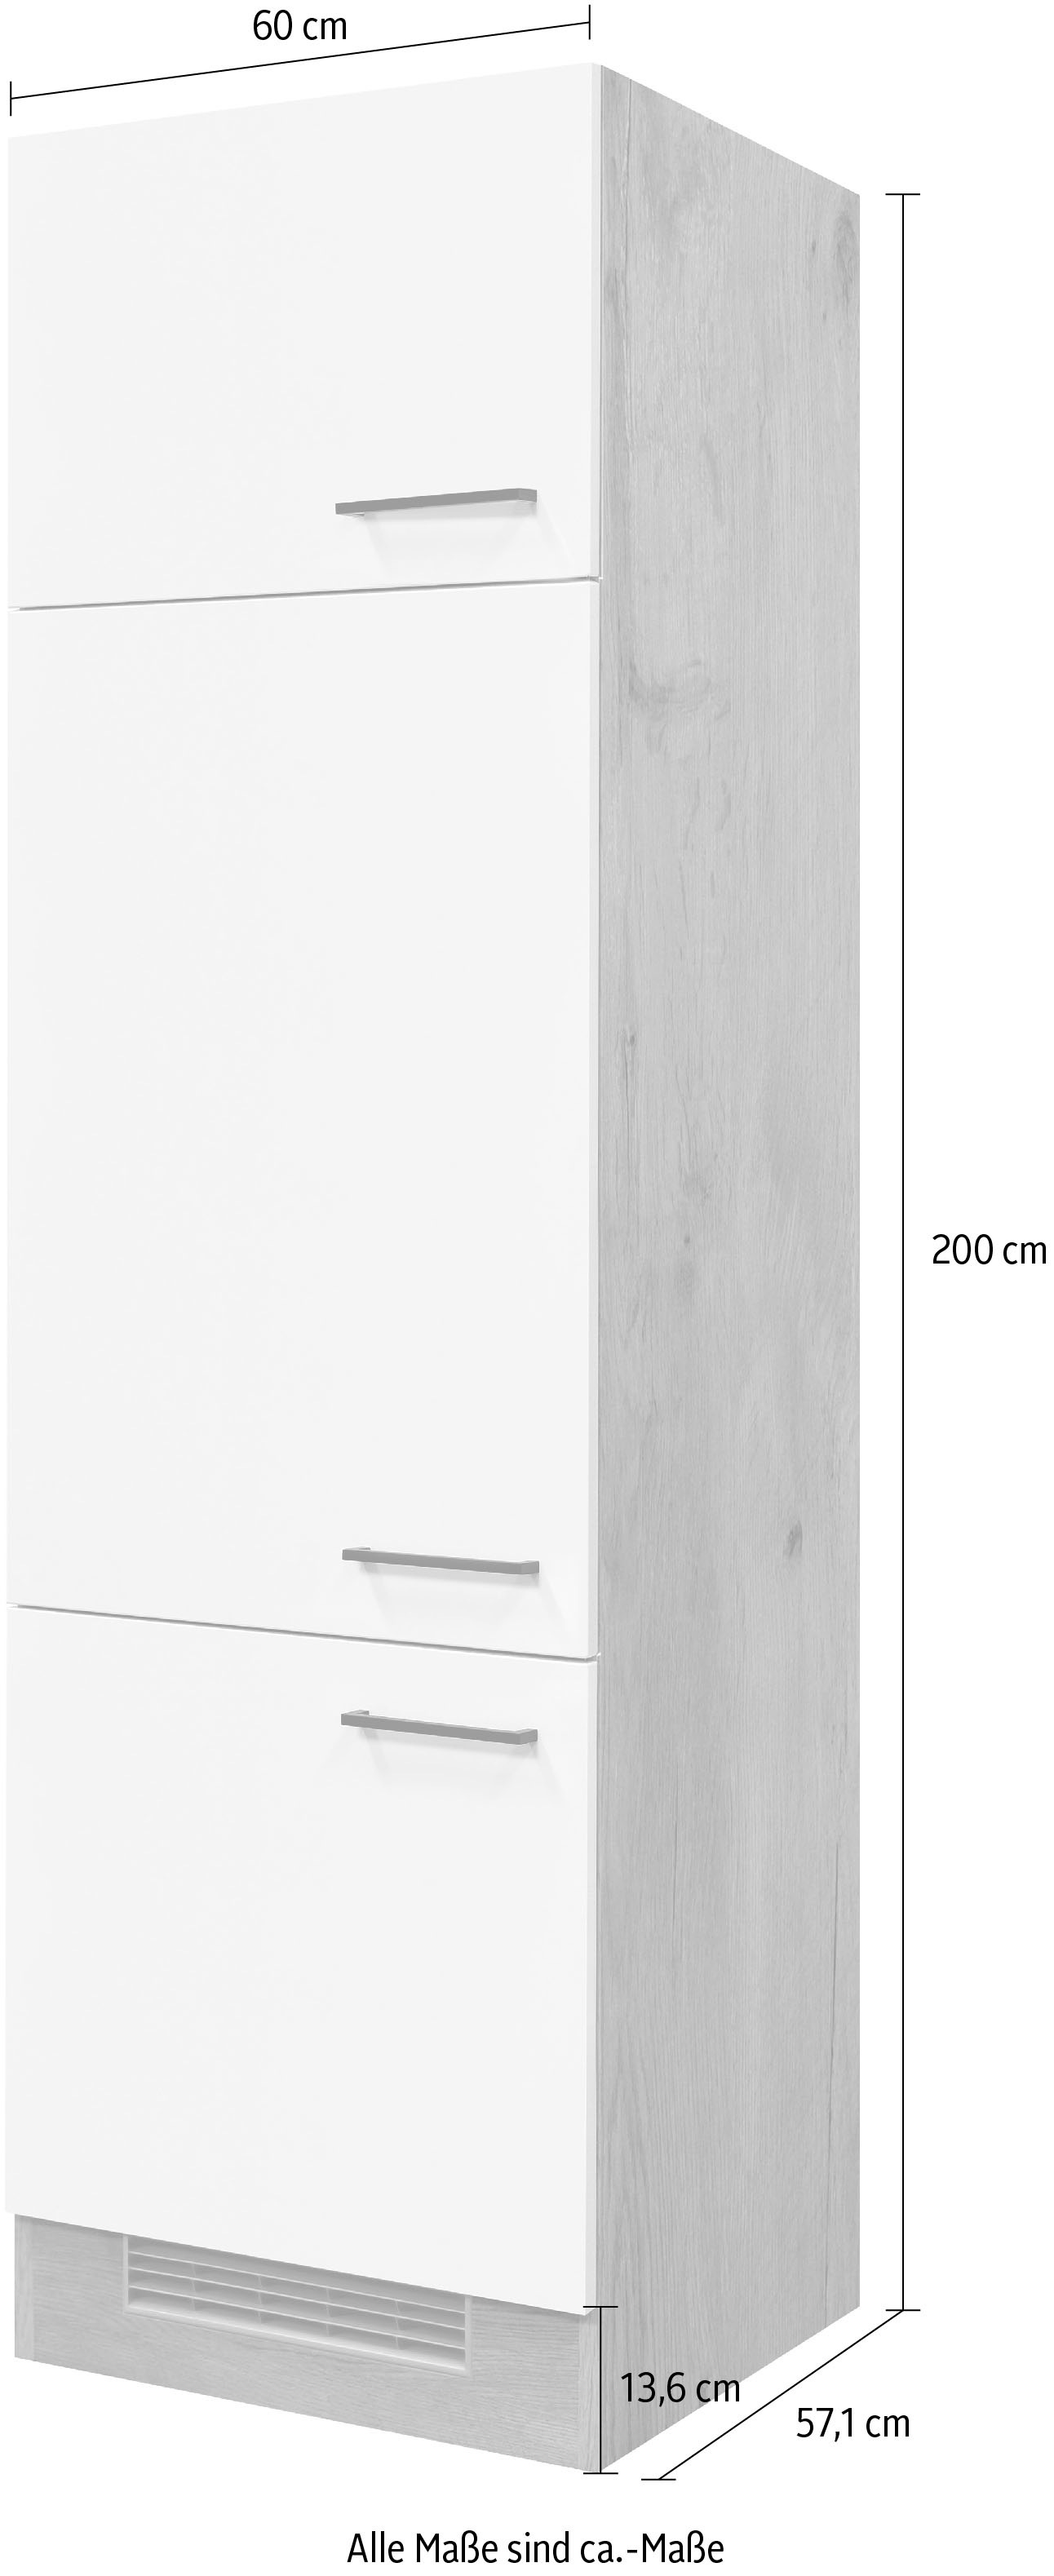 Flex-Well Küche »Vintea«, 60 cm breit, 200 cm hoch, inklusive Kühlschrank